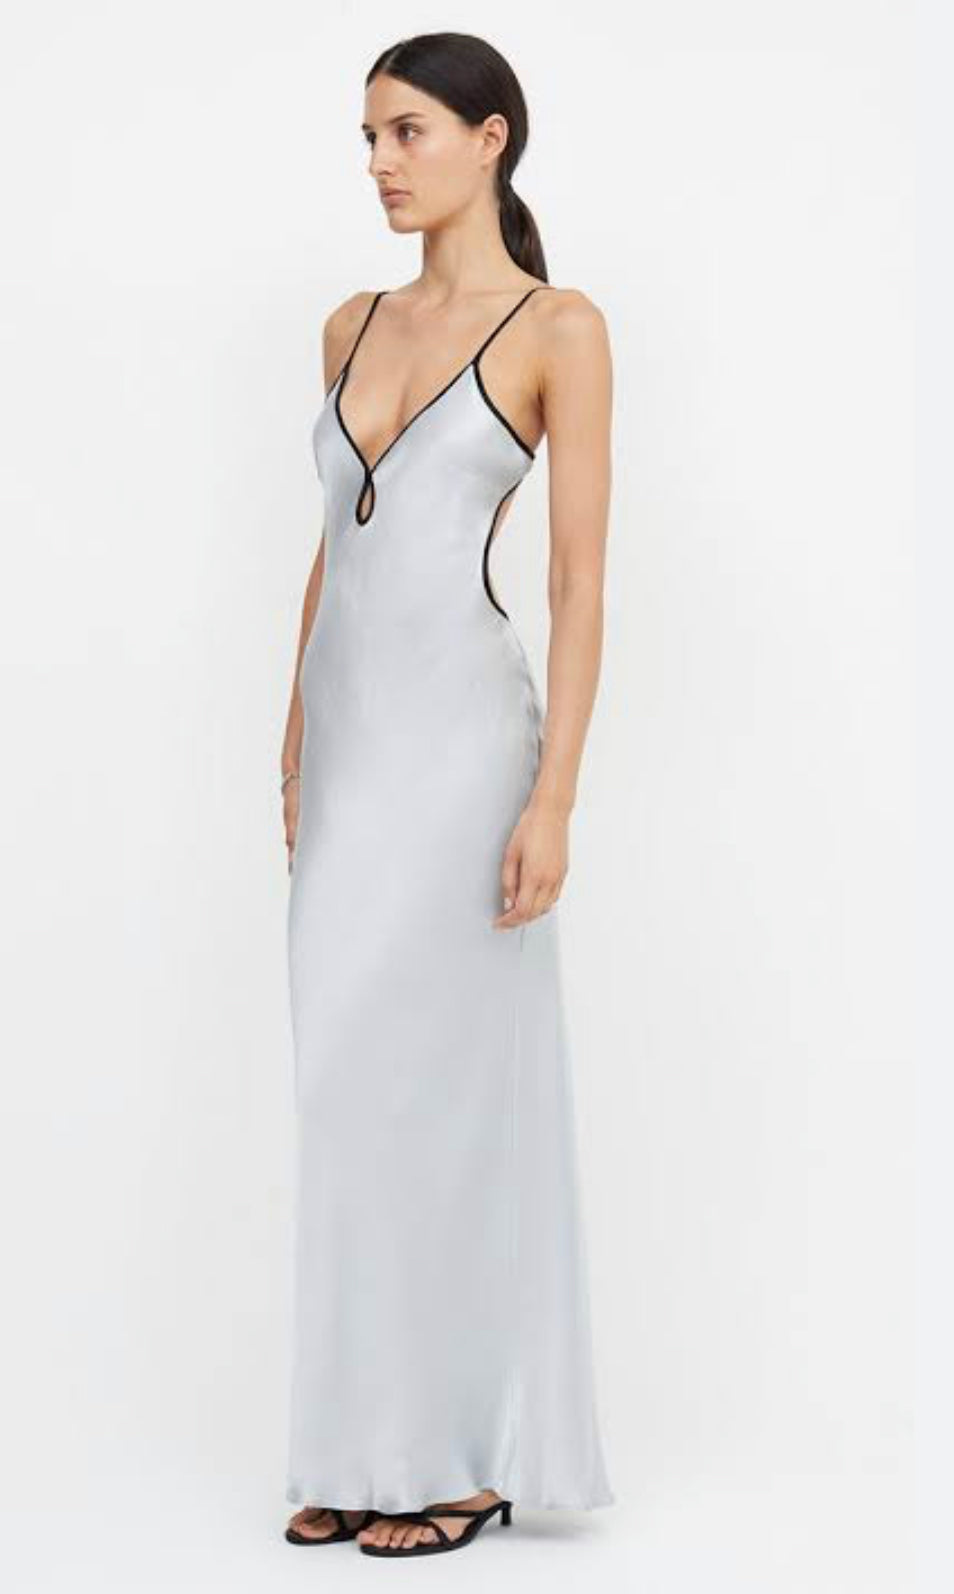 Bec & Bridge Cedar City Silver Maxi Dress angled profile view on white background